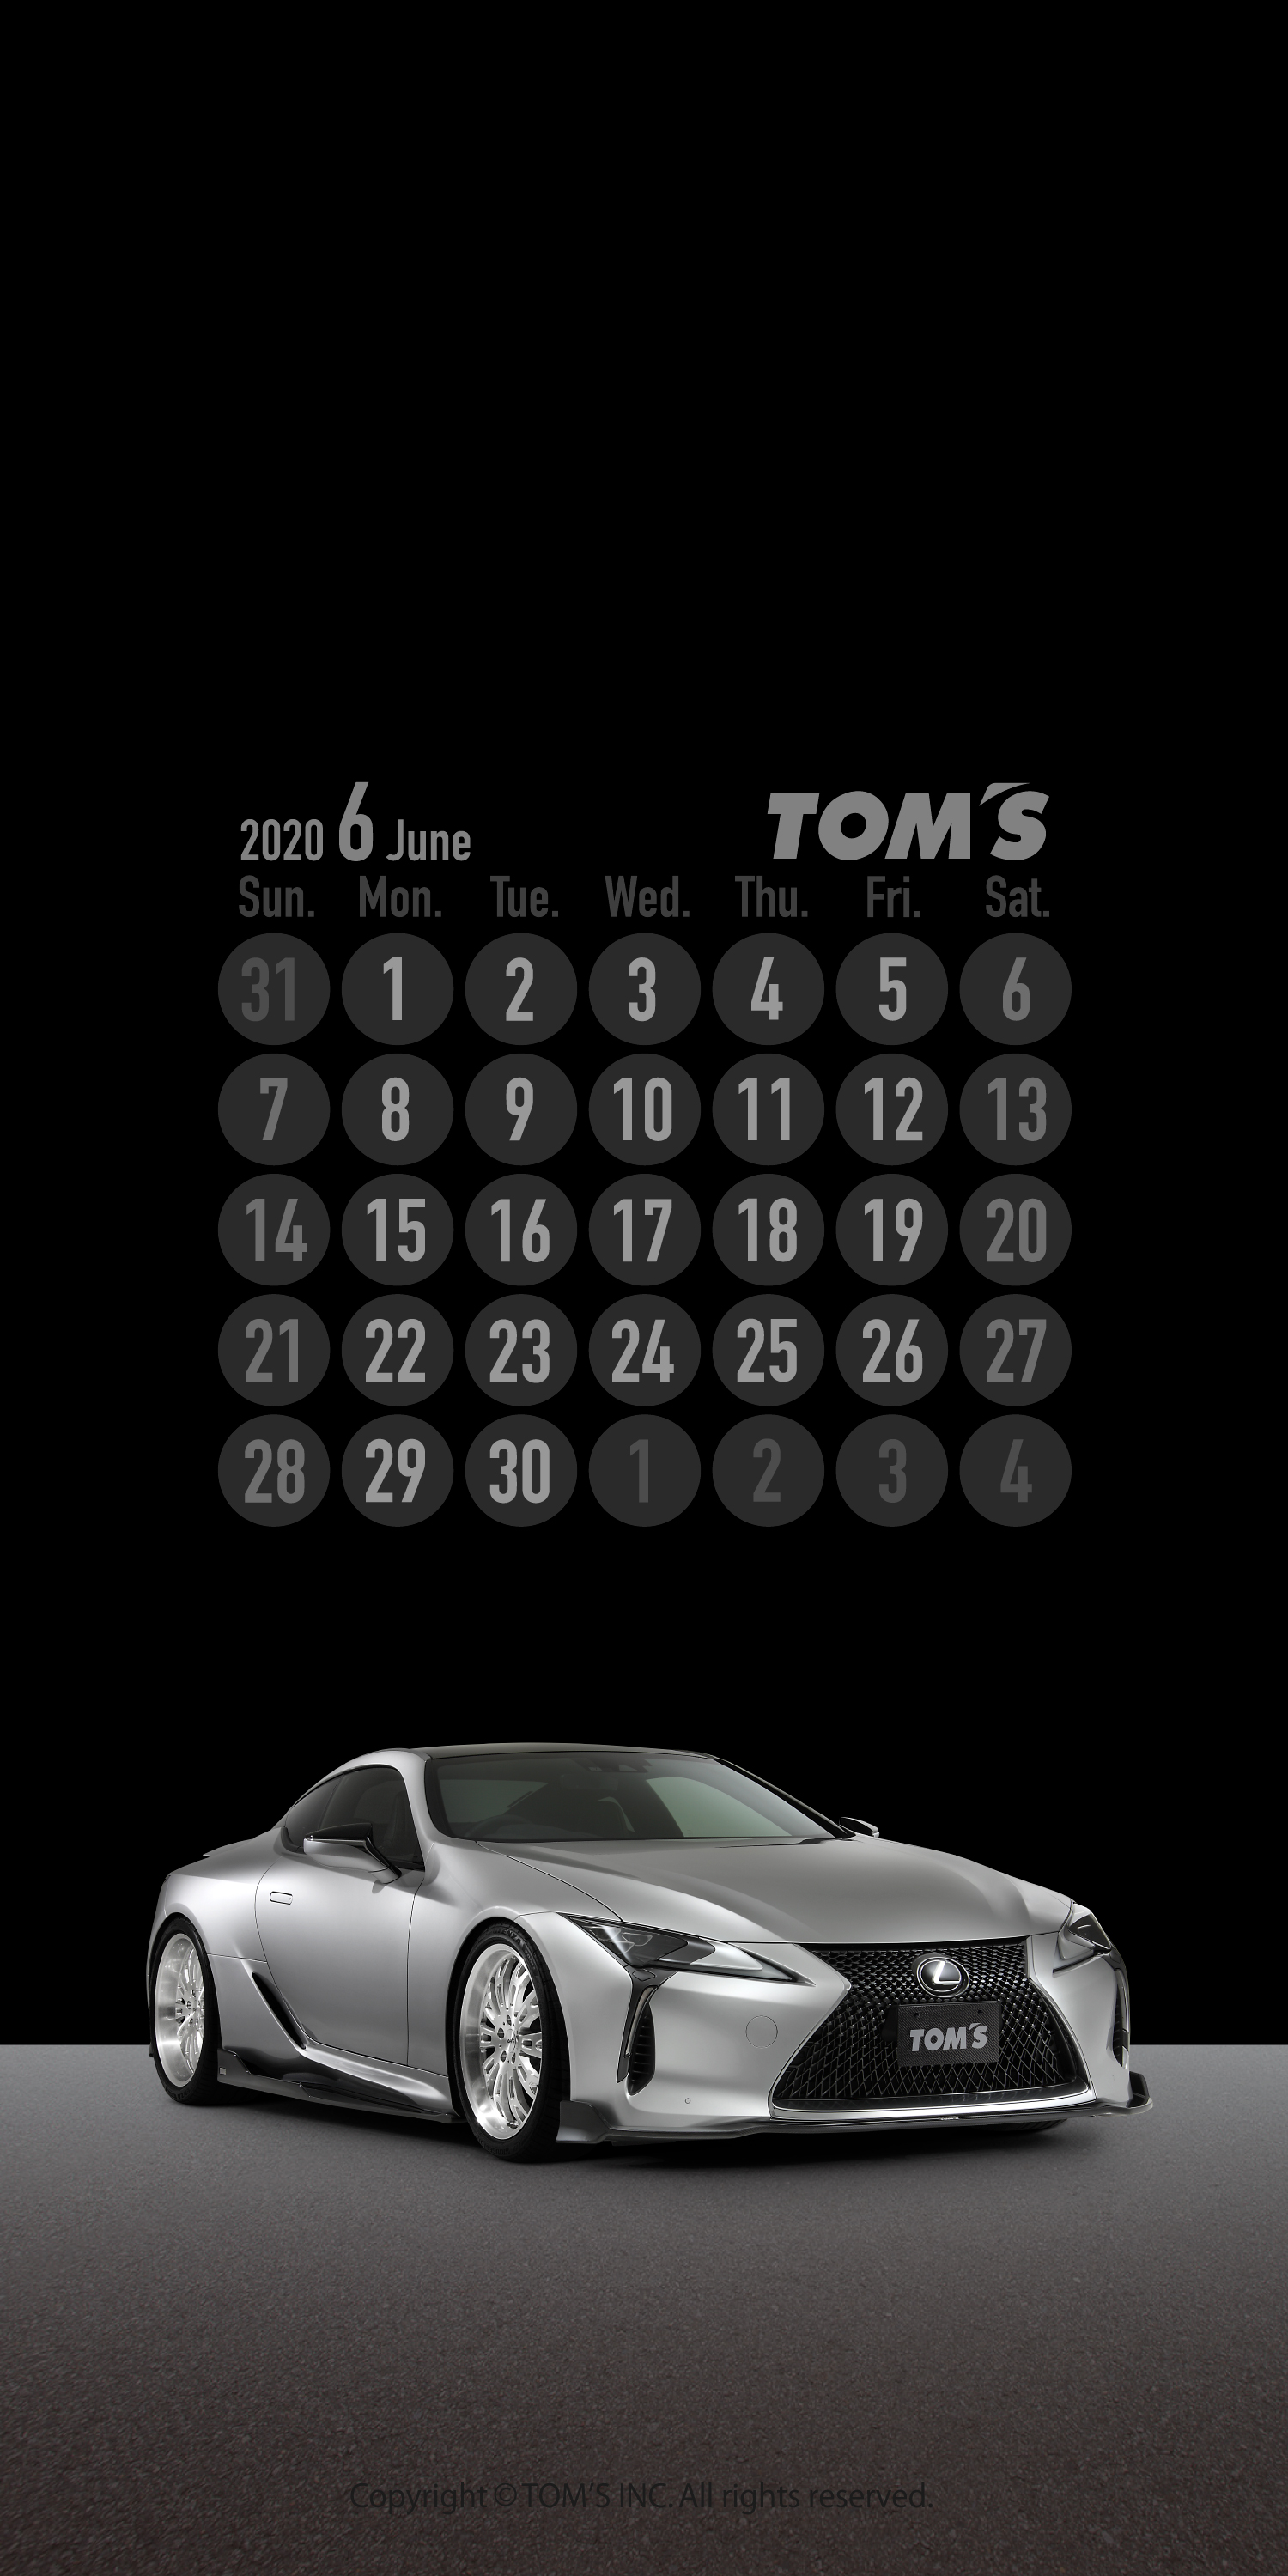 Tom S Racing 本日の ロック画面 カレンダー ホーム画面 壁紙 は Tom S Lexus Lc500 以前の壁紙は Tomsracing スマホ壁紙 で検索してみてください Tomsracing Lexus Lc500 T Co Nvuysayv0g Twitter